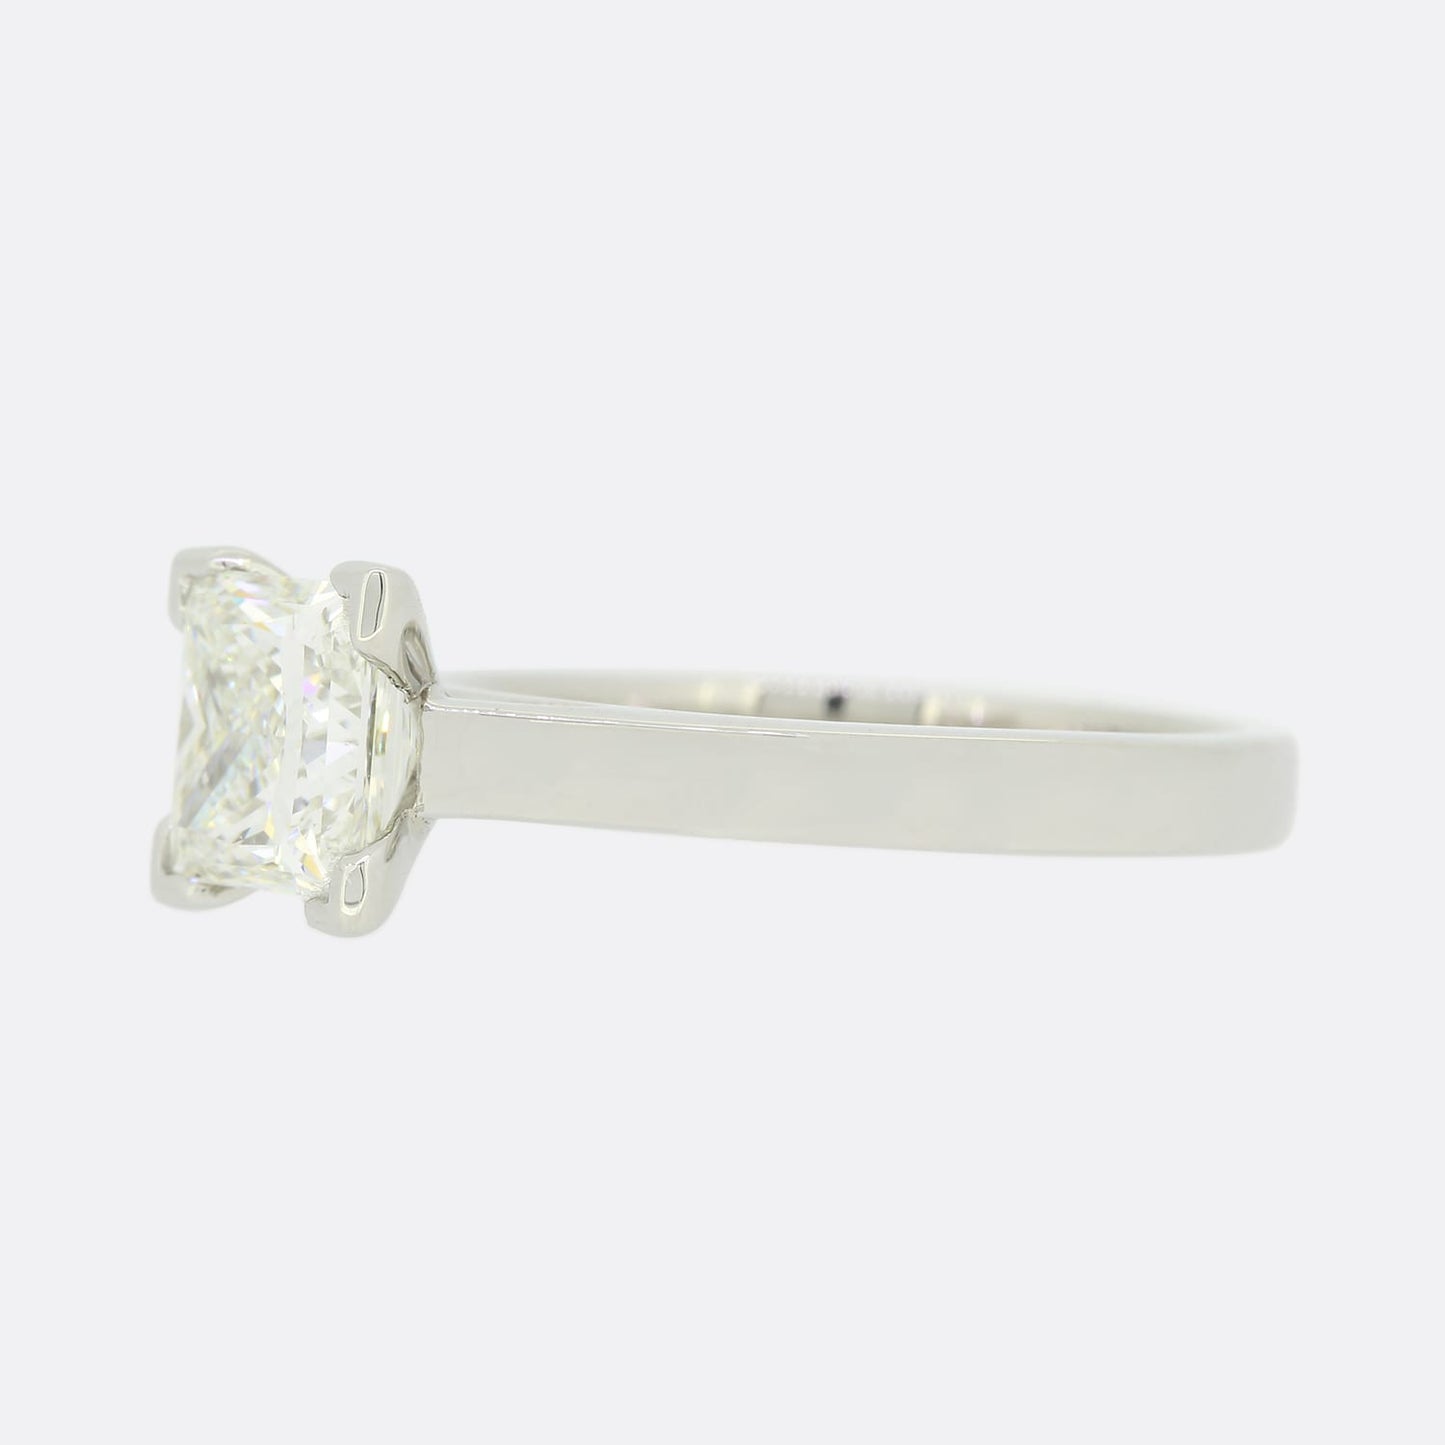 1.62 Carat Princess Cut Diamond Solitaire Engagement Ring